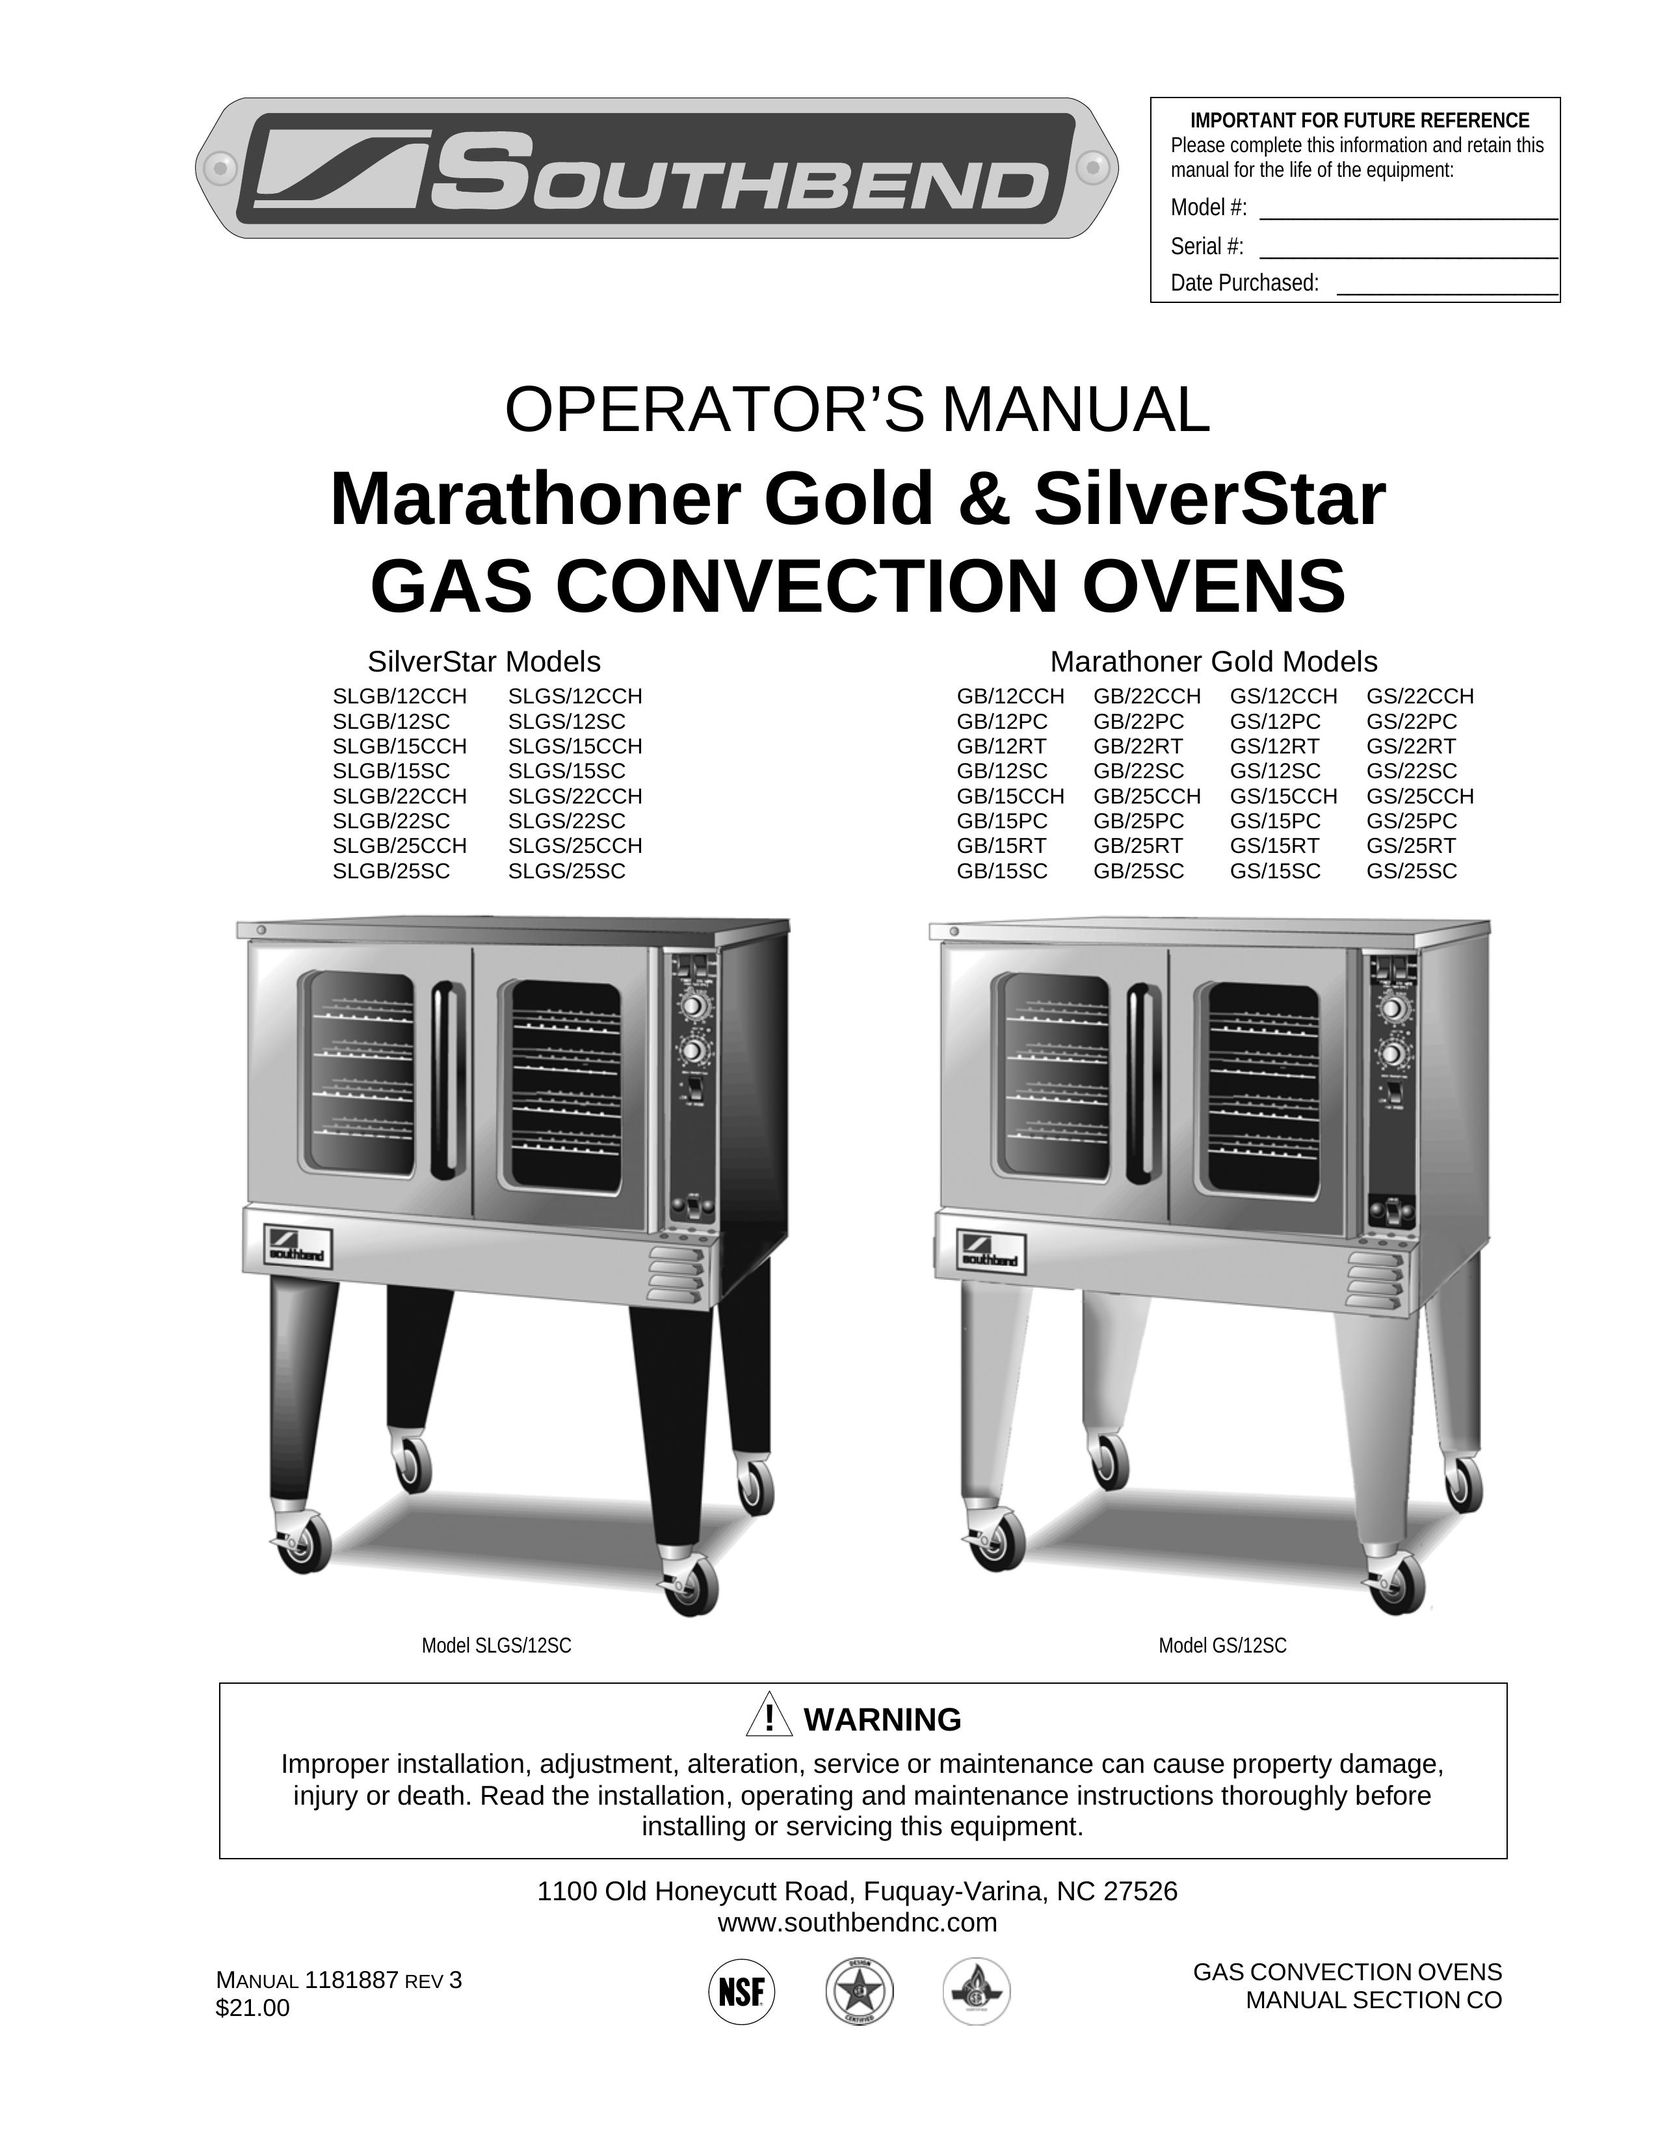 Southbend Marathoner Convection Oven User Manual